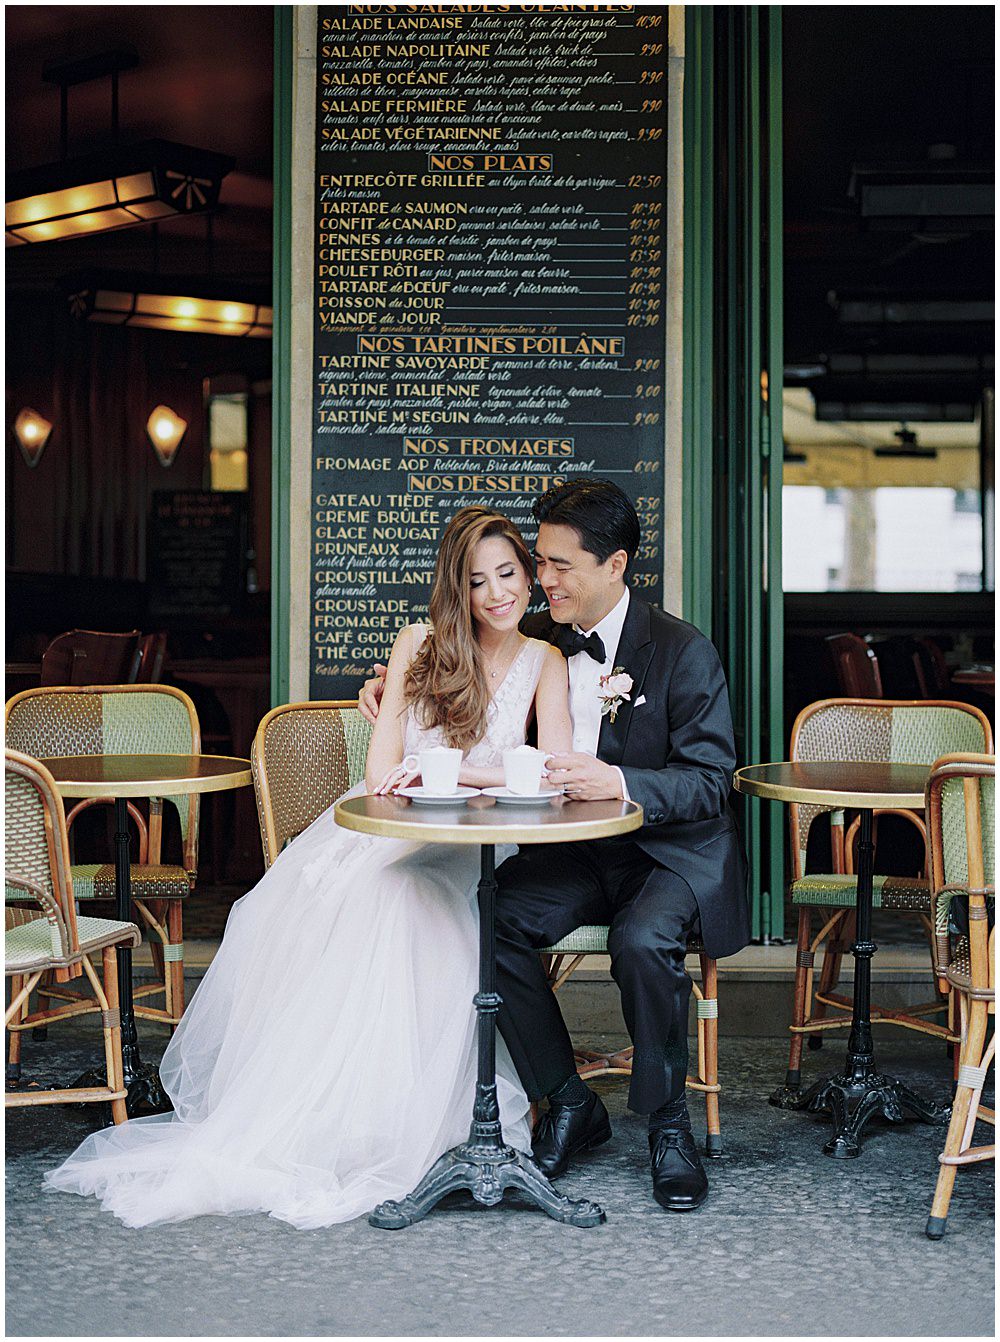 Top 10 Paris Wedding Photography Locations, Paris cafe wedding photograph, Paris cafe couples photoshoot, Paris cafe, Paris wedding photographer